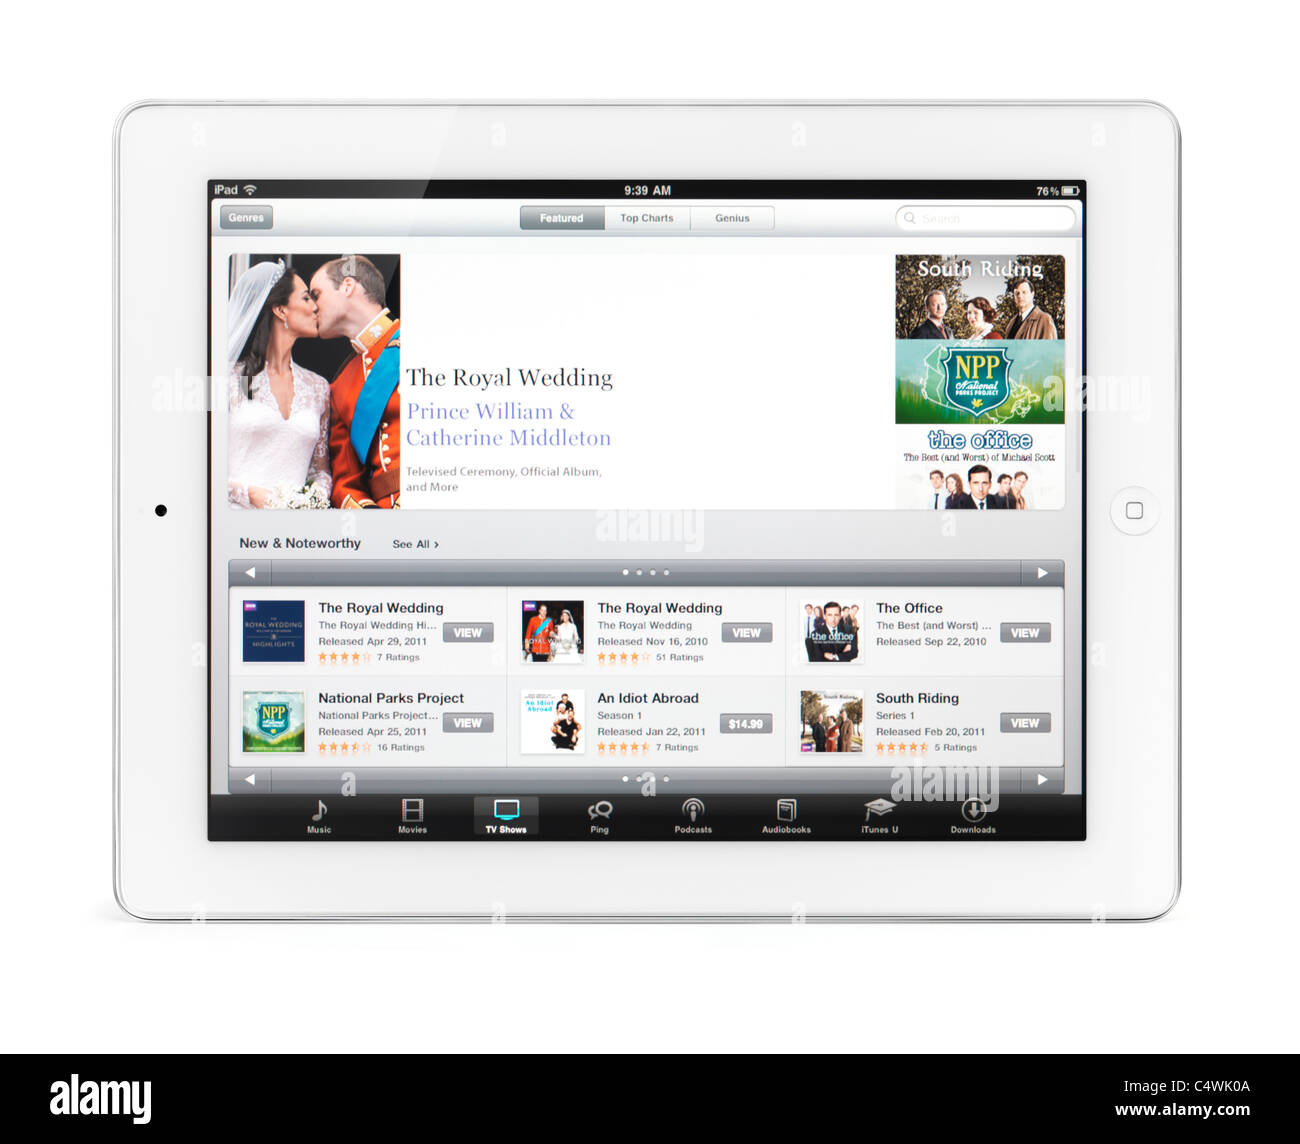 Apple iPad 2 tablet PC con iTunes i programmi TV con la royal wedding sul suo display. Isolato su sfondo bianco. Foto Stock